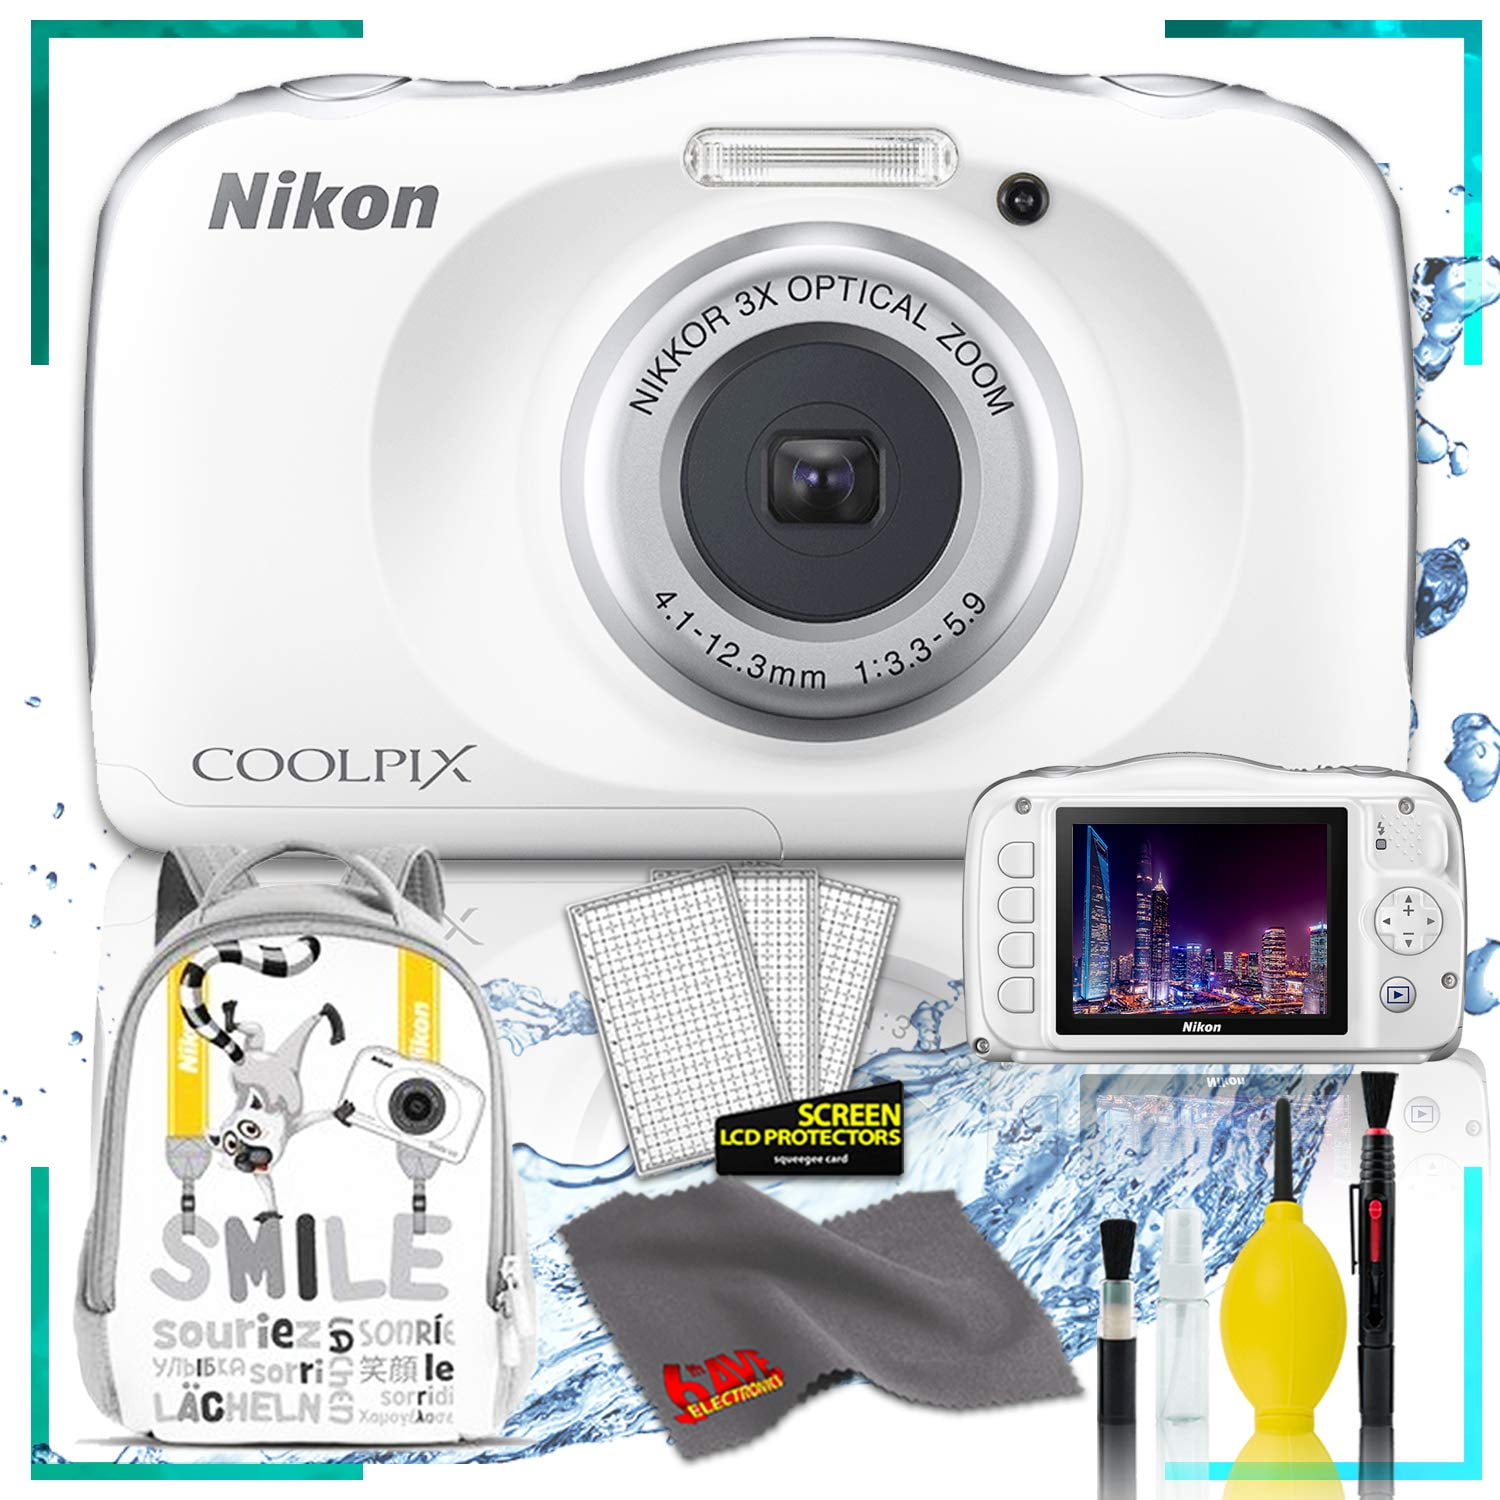 Nikon Coolpix W150 Digital Camera - White (Intl Model) with 